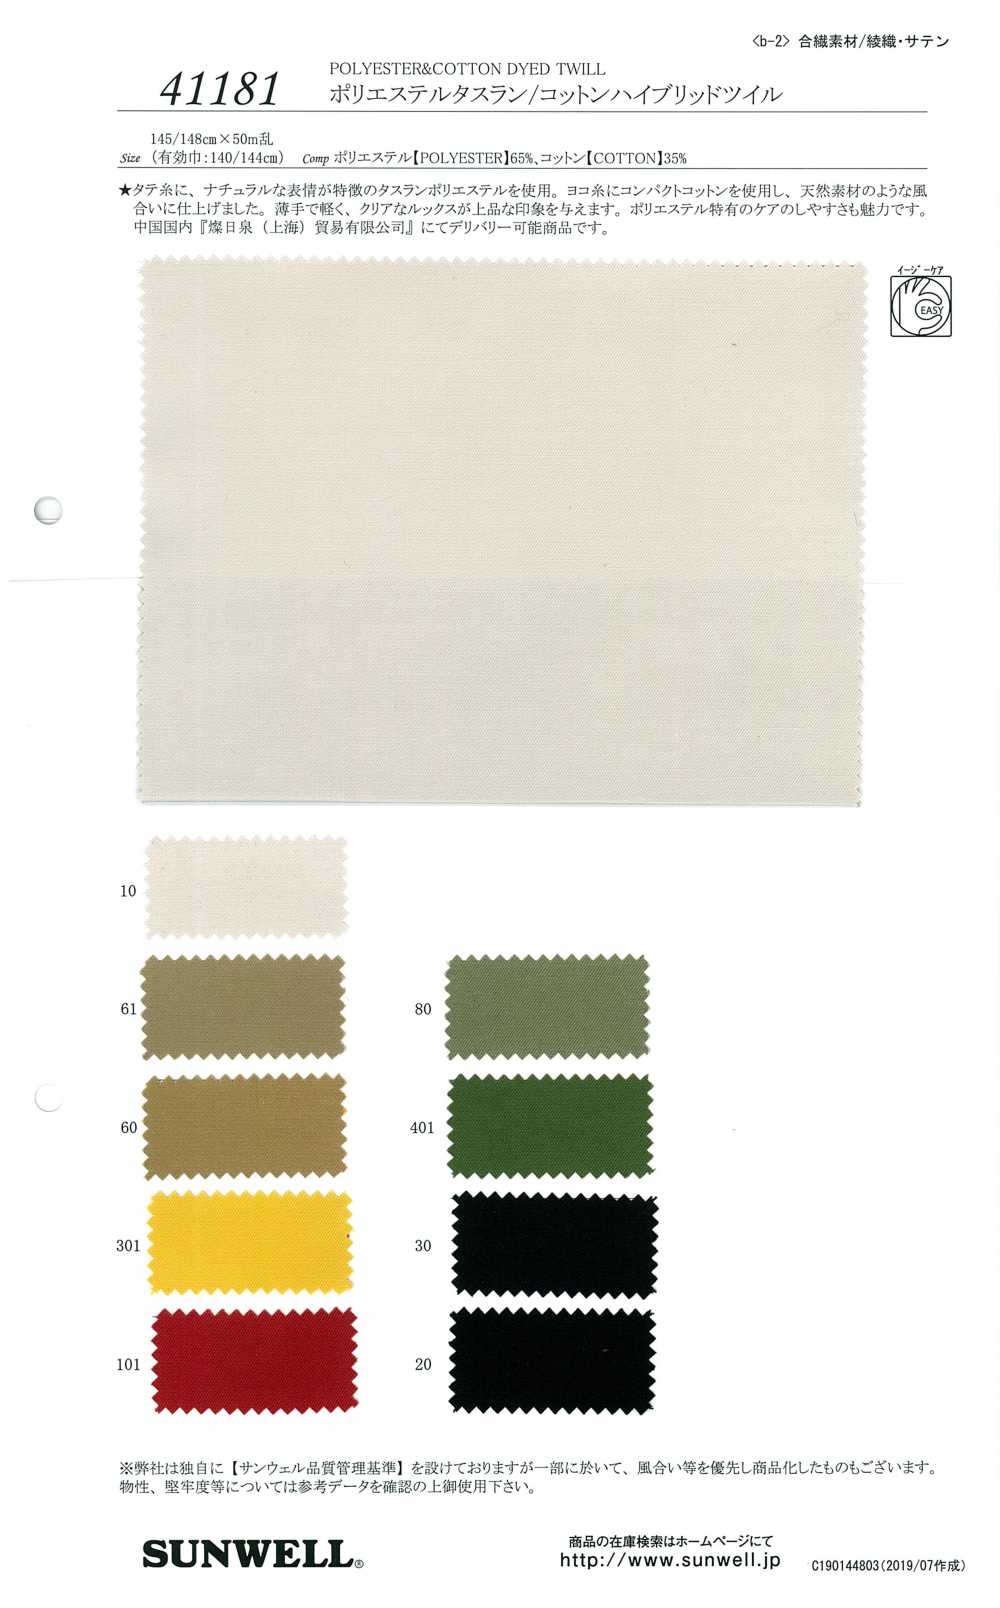 41181 Polyester Taslan / Cotton Hybrid Twill[Textile / Fabric] SUNWELL